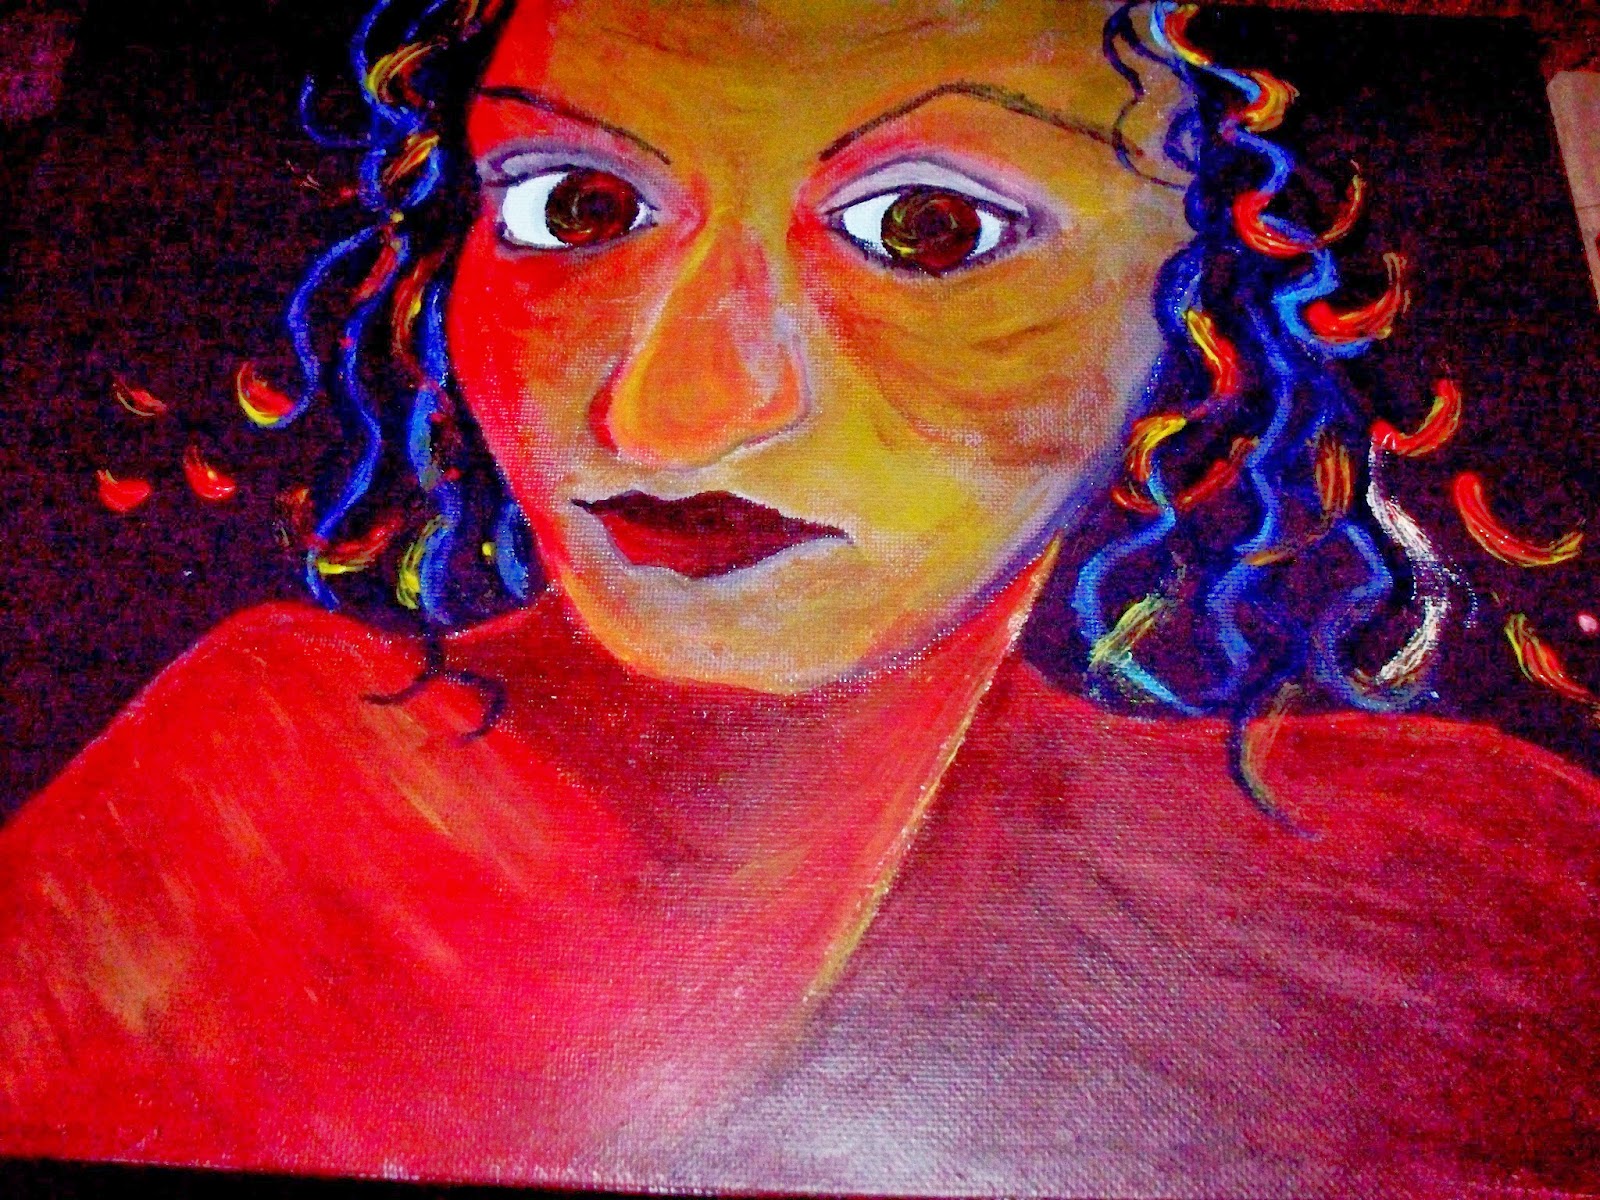 Colorful Portrait of a woman